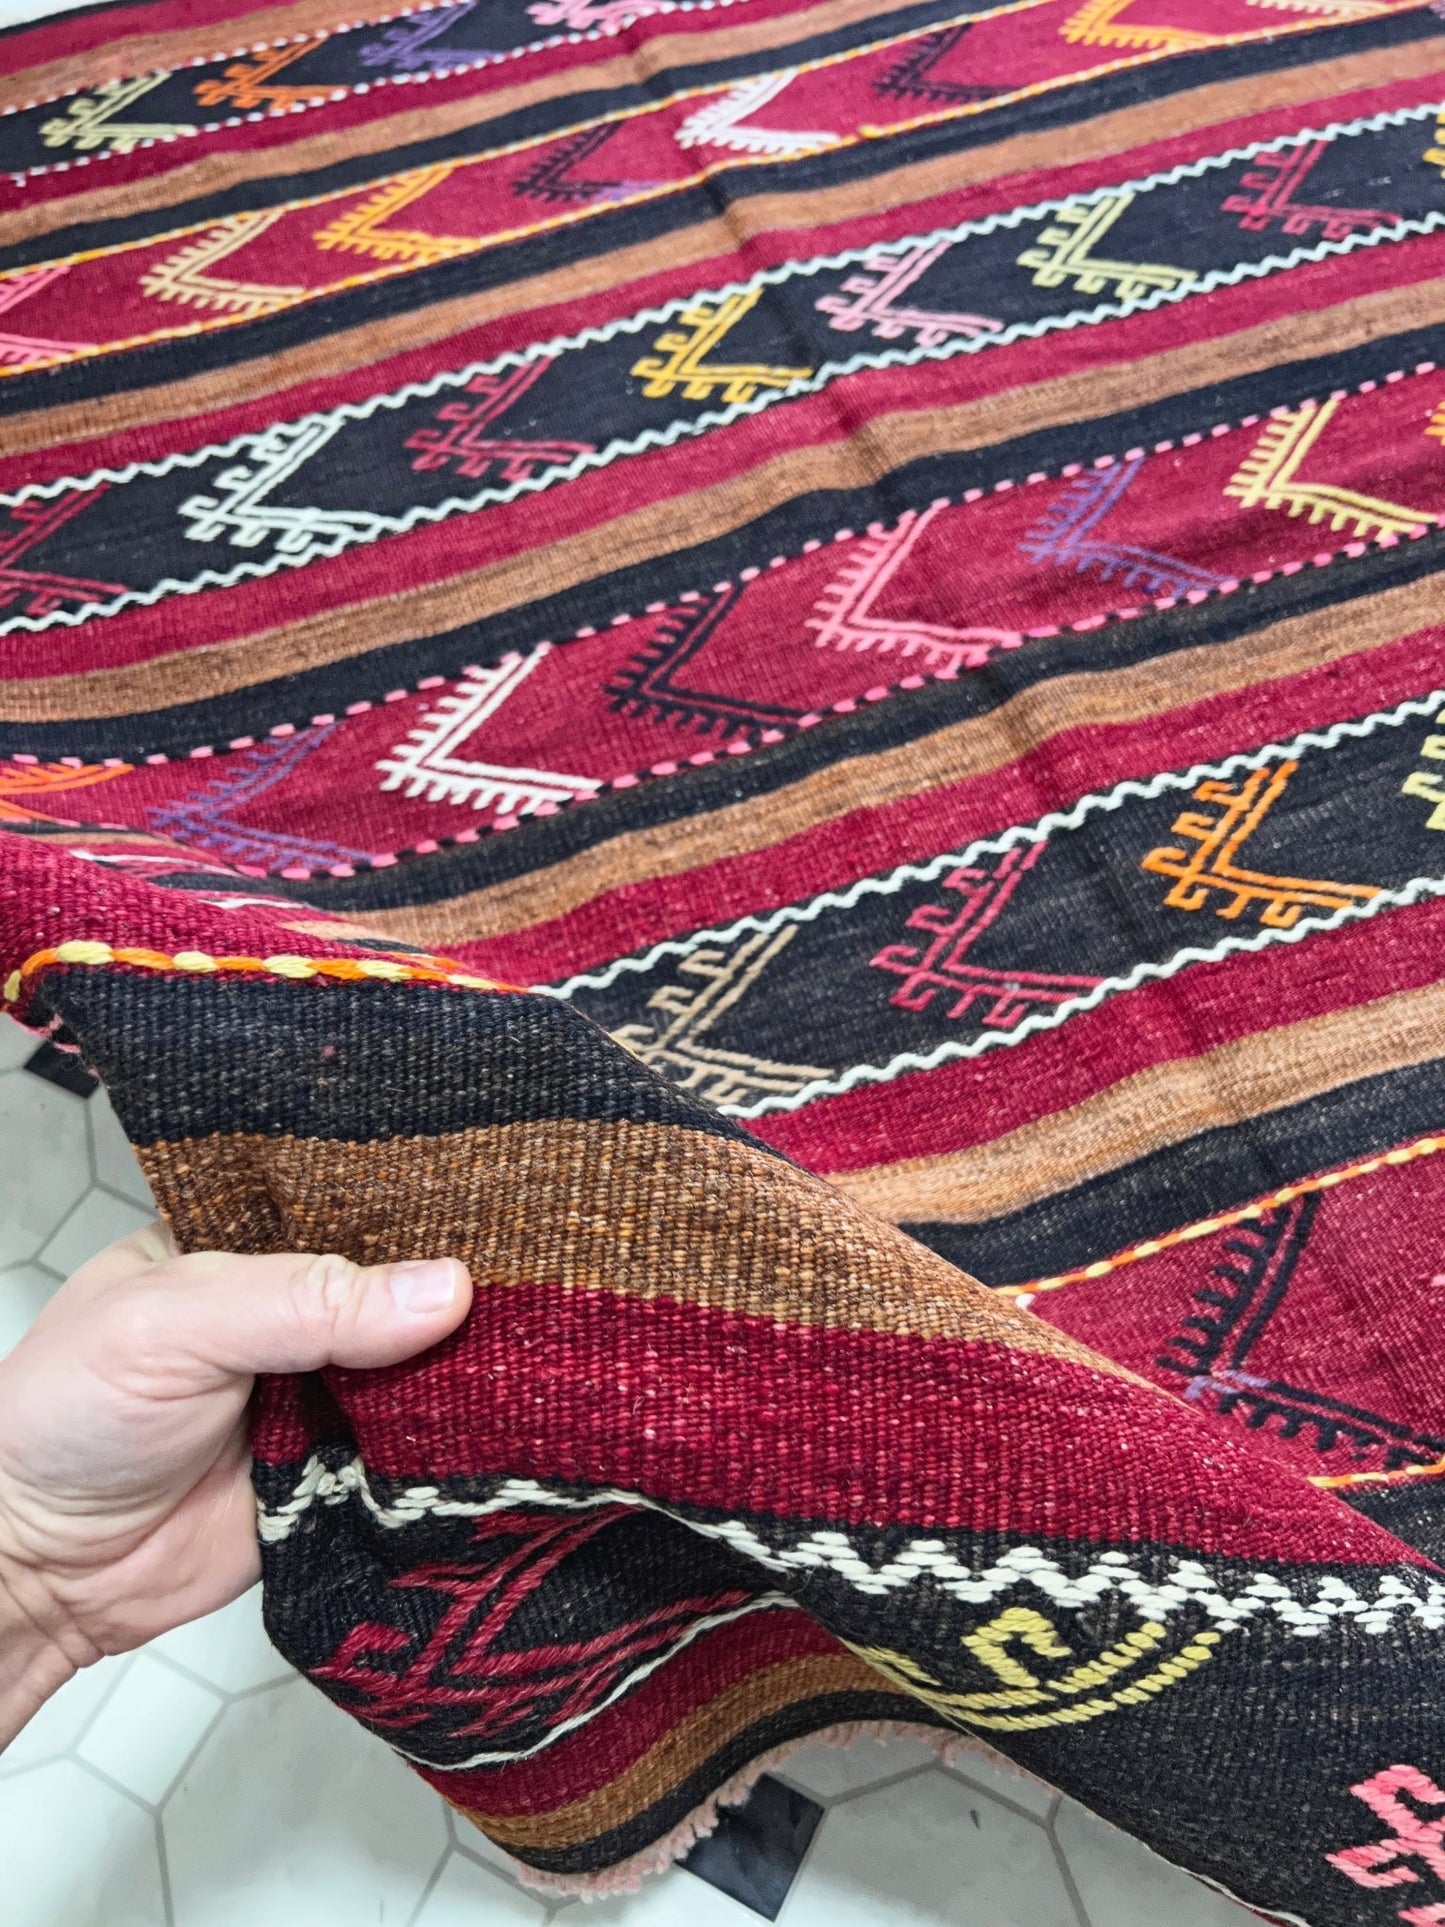 vintage small turkish rug for bedroom living room kitchen office. Oriental rug store san francisco bay area. Buy rug online